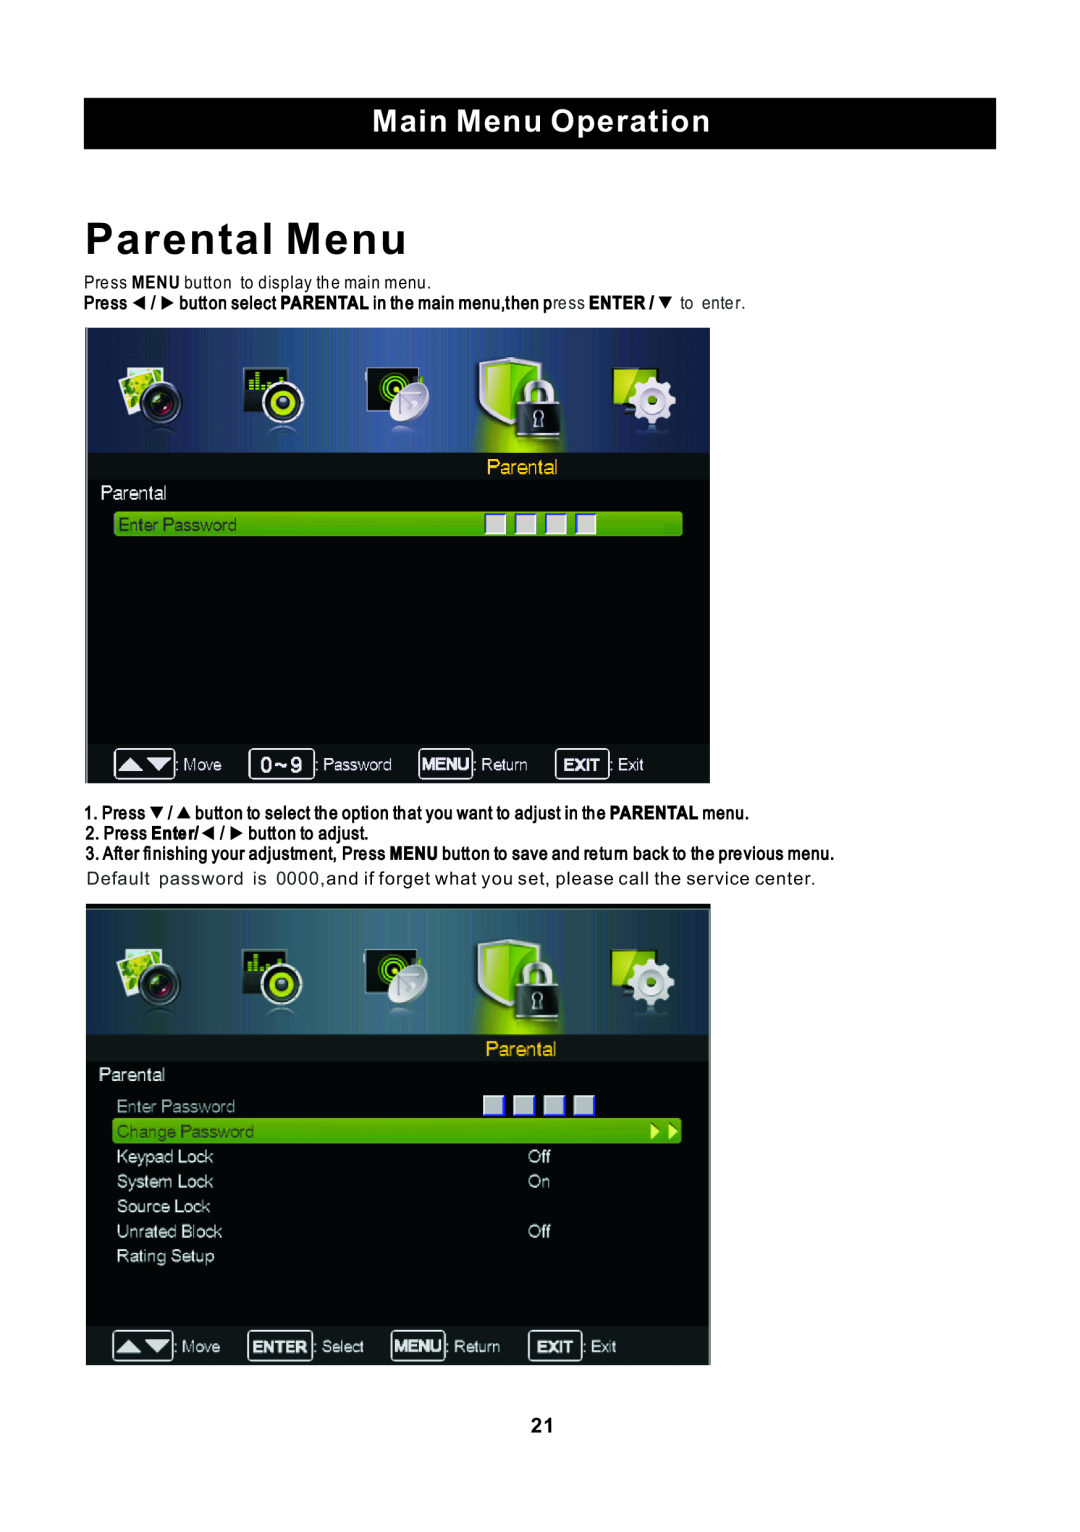 ProScan RLED2445A-B instruction manual Parental Menu, Main Menu Operation 